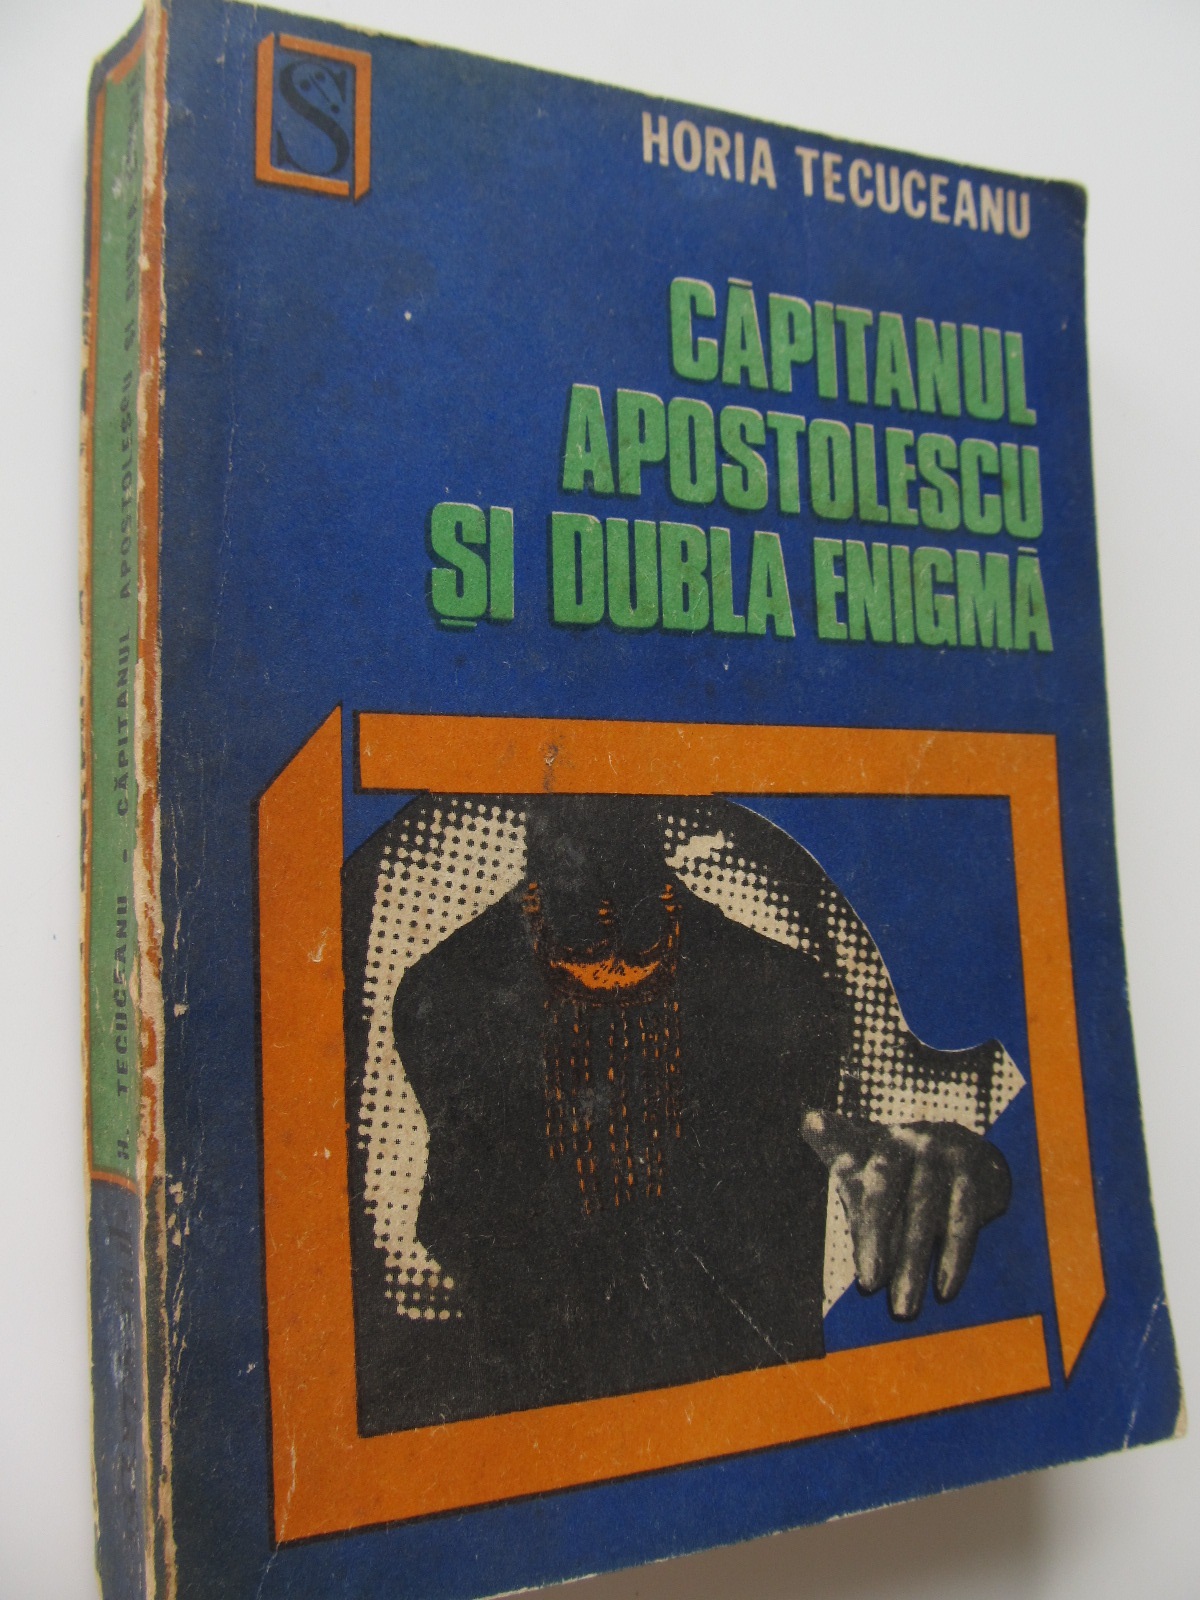 Capitanul Apostolescu si dubla enigma - Horia Tecuceanu | Detalii carte